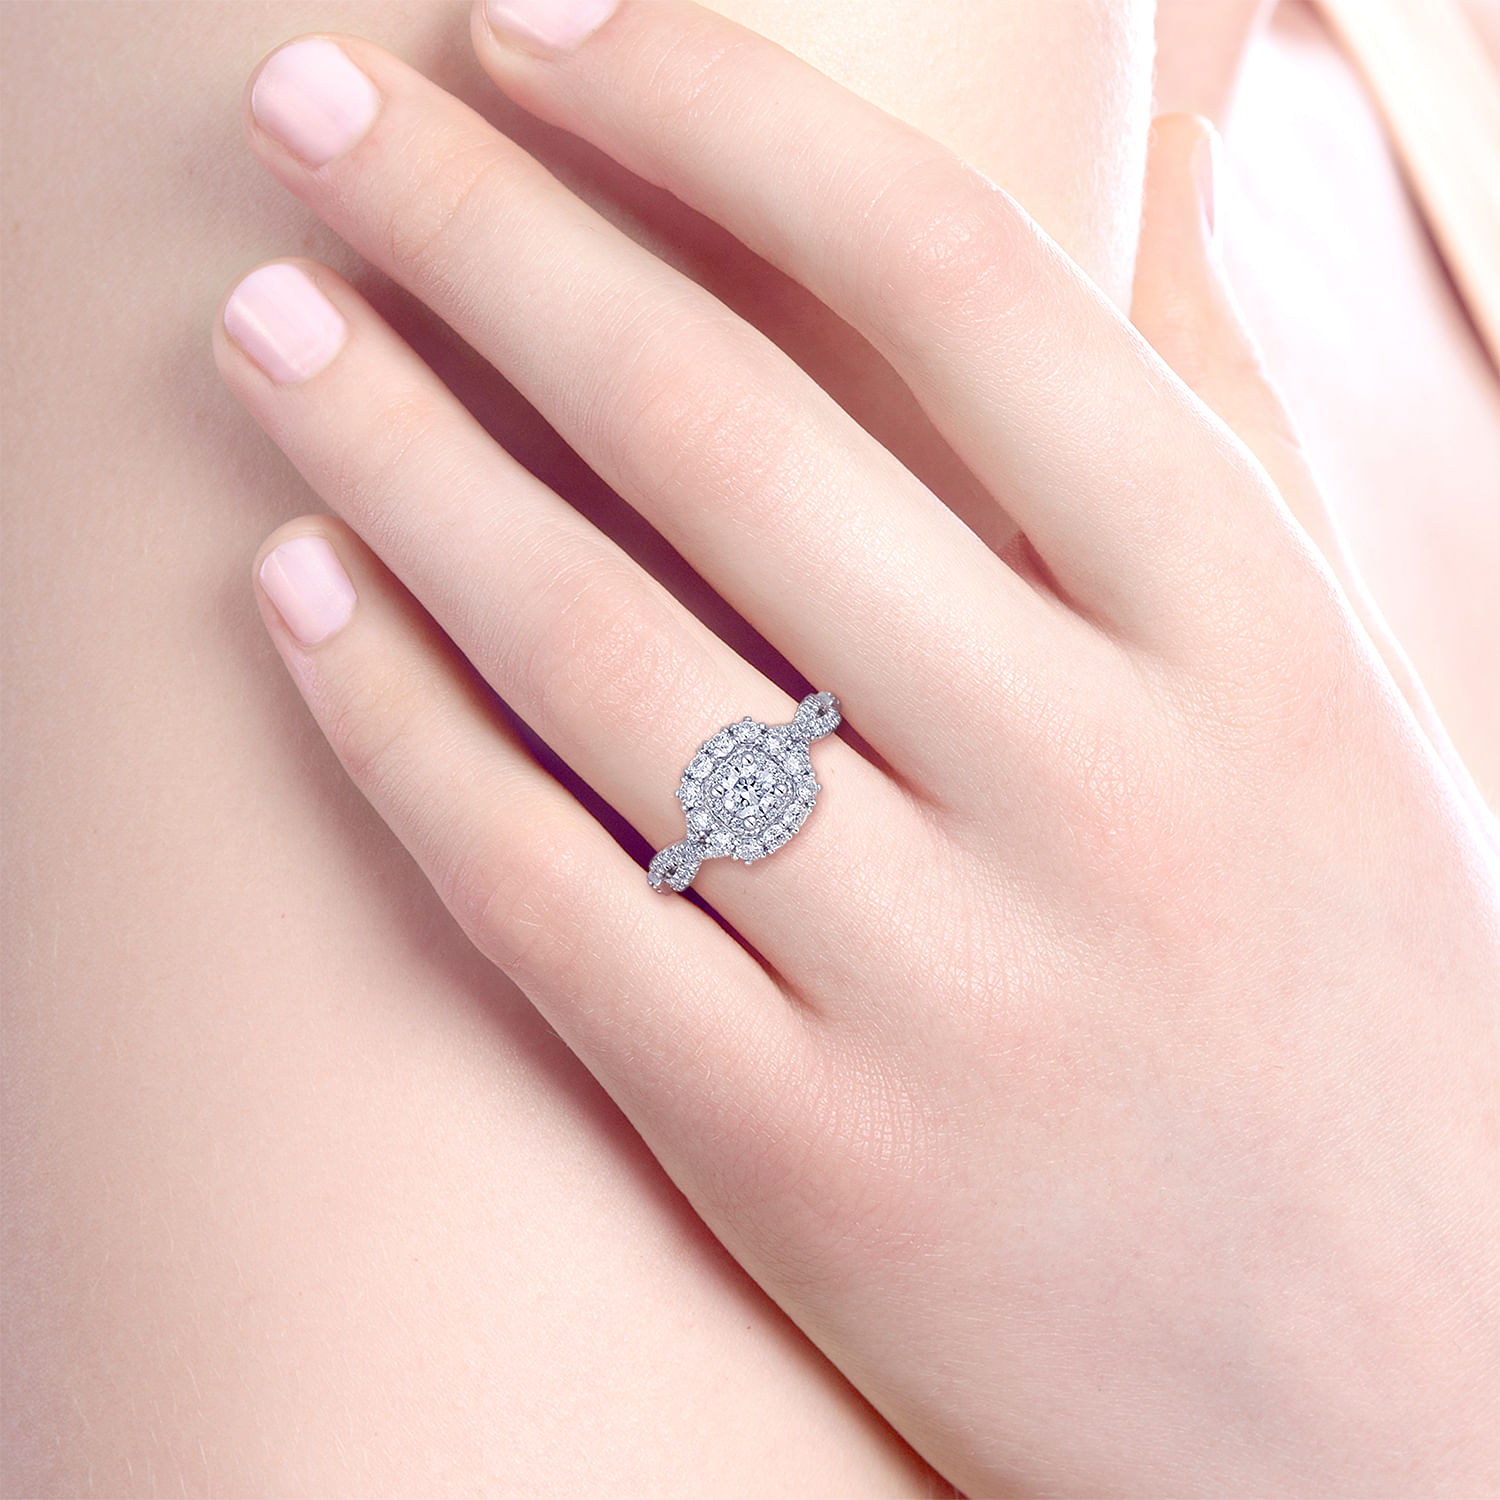 14K White-Rose Gold Cushion Double Halo Round Diamond Complete Engagement Ring